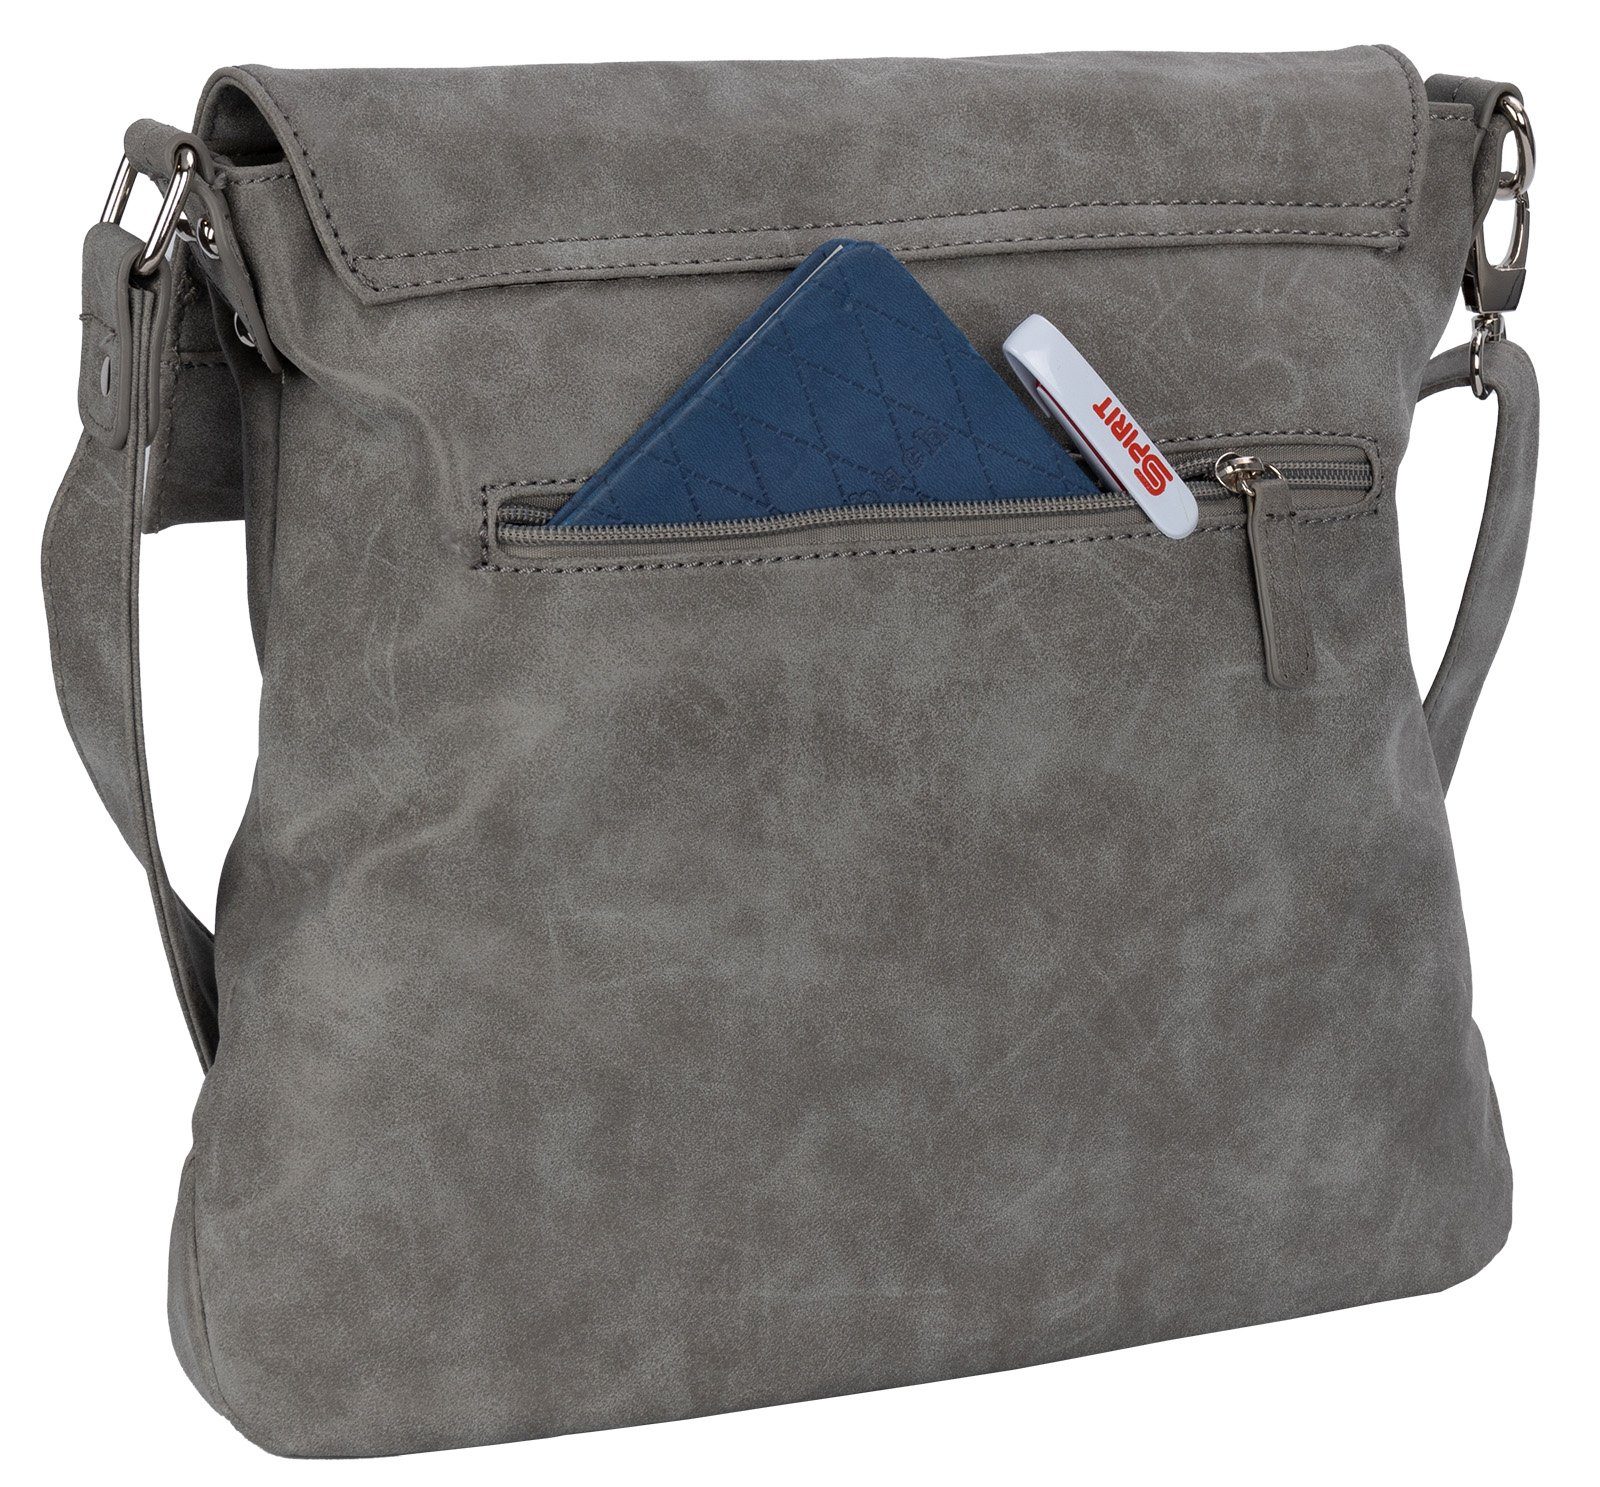 Street GRAU Bag Handtasche Schultertasche Umhängetasche Schultertasche, T0103, tragbar BAG als Damentasche Schlüsseltasche Umhängetasche STREET